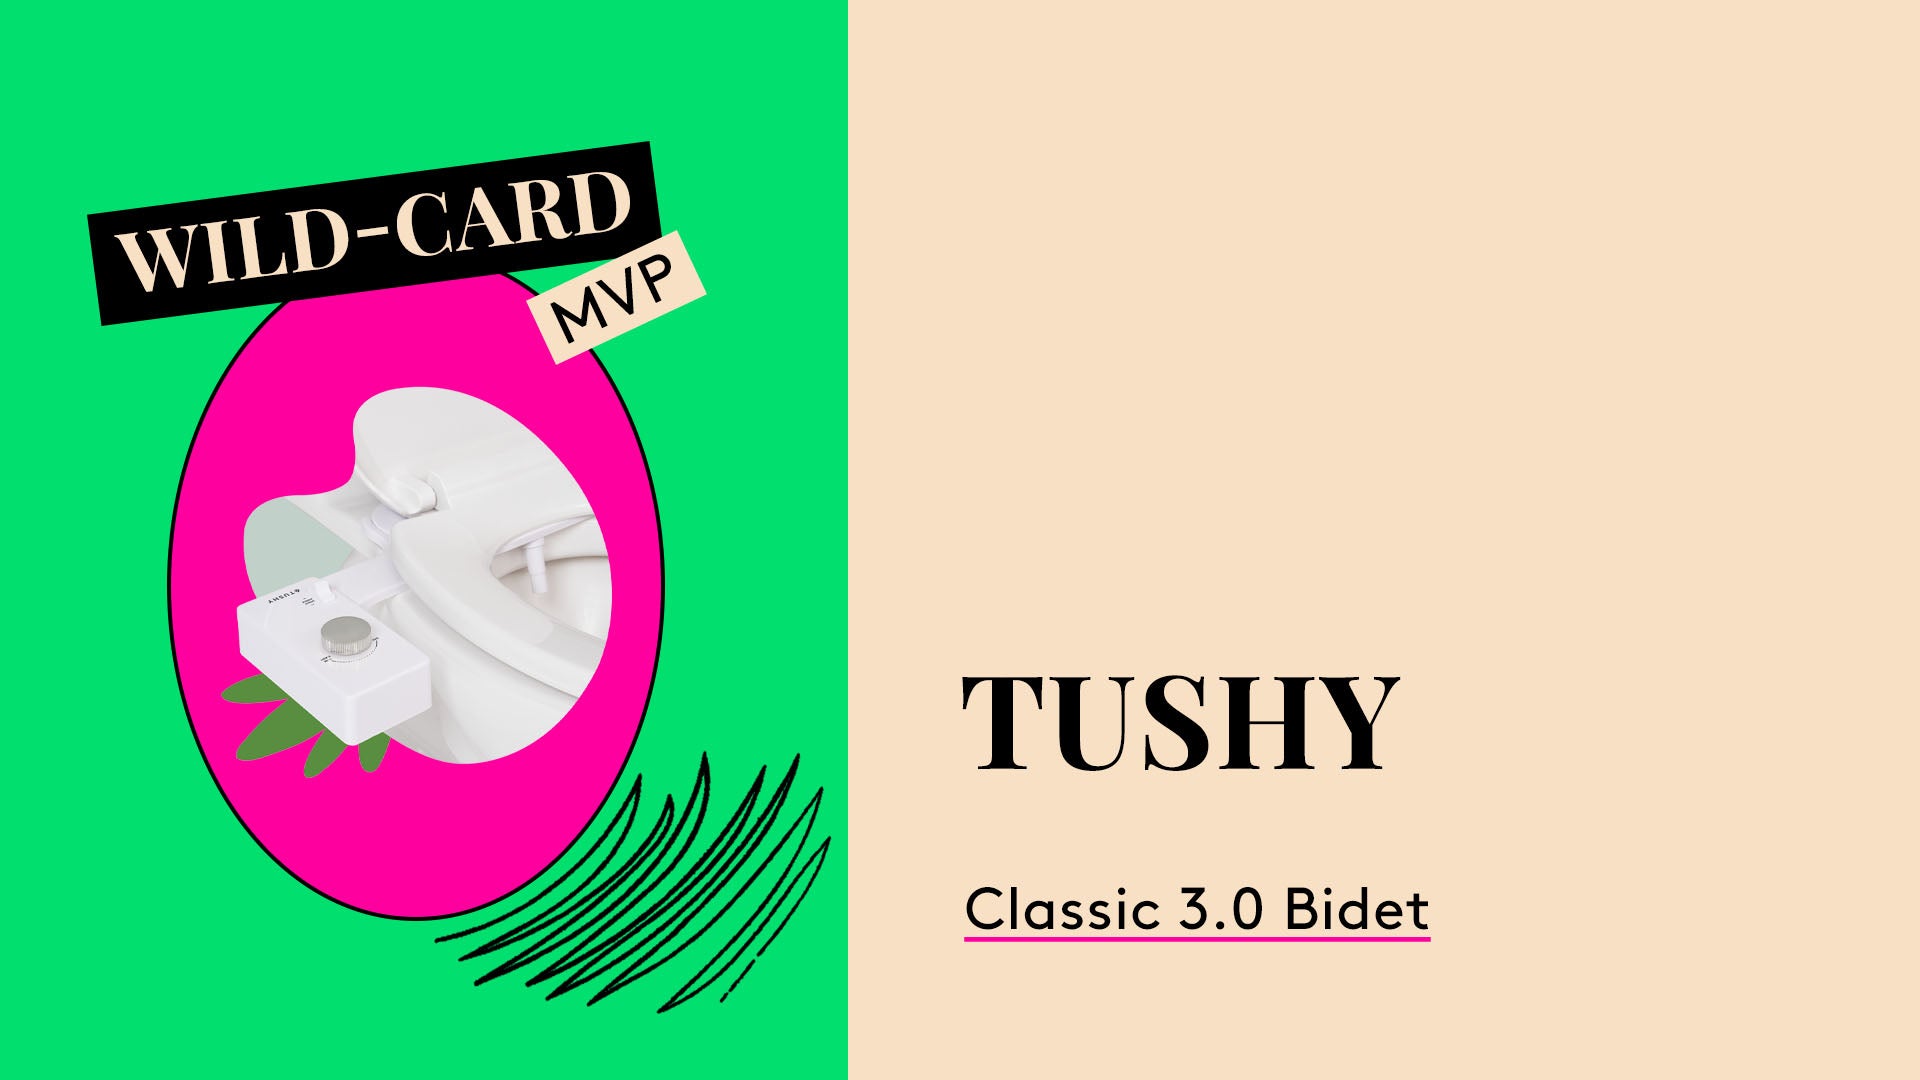 Wild-Card MVP. Tushy Classic 3.0 Bidet.